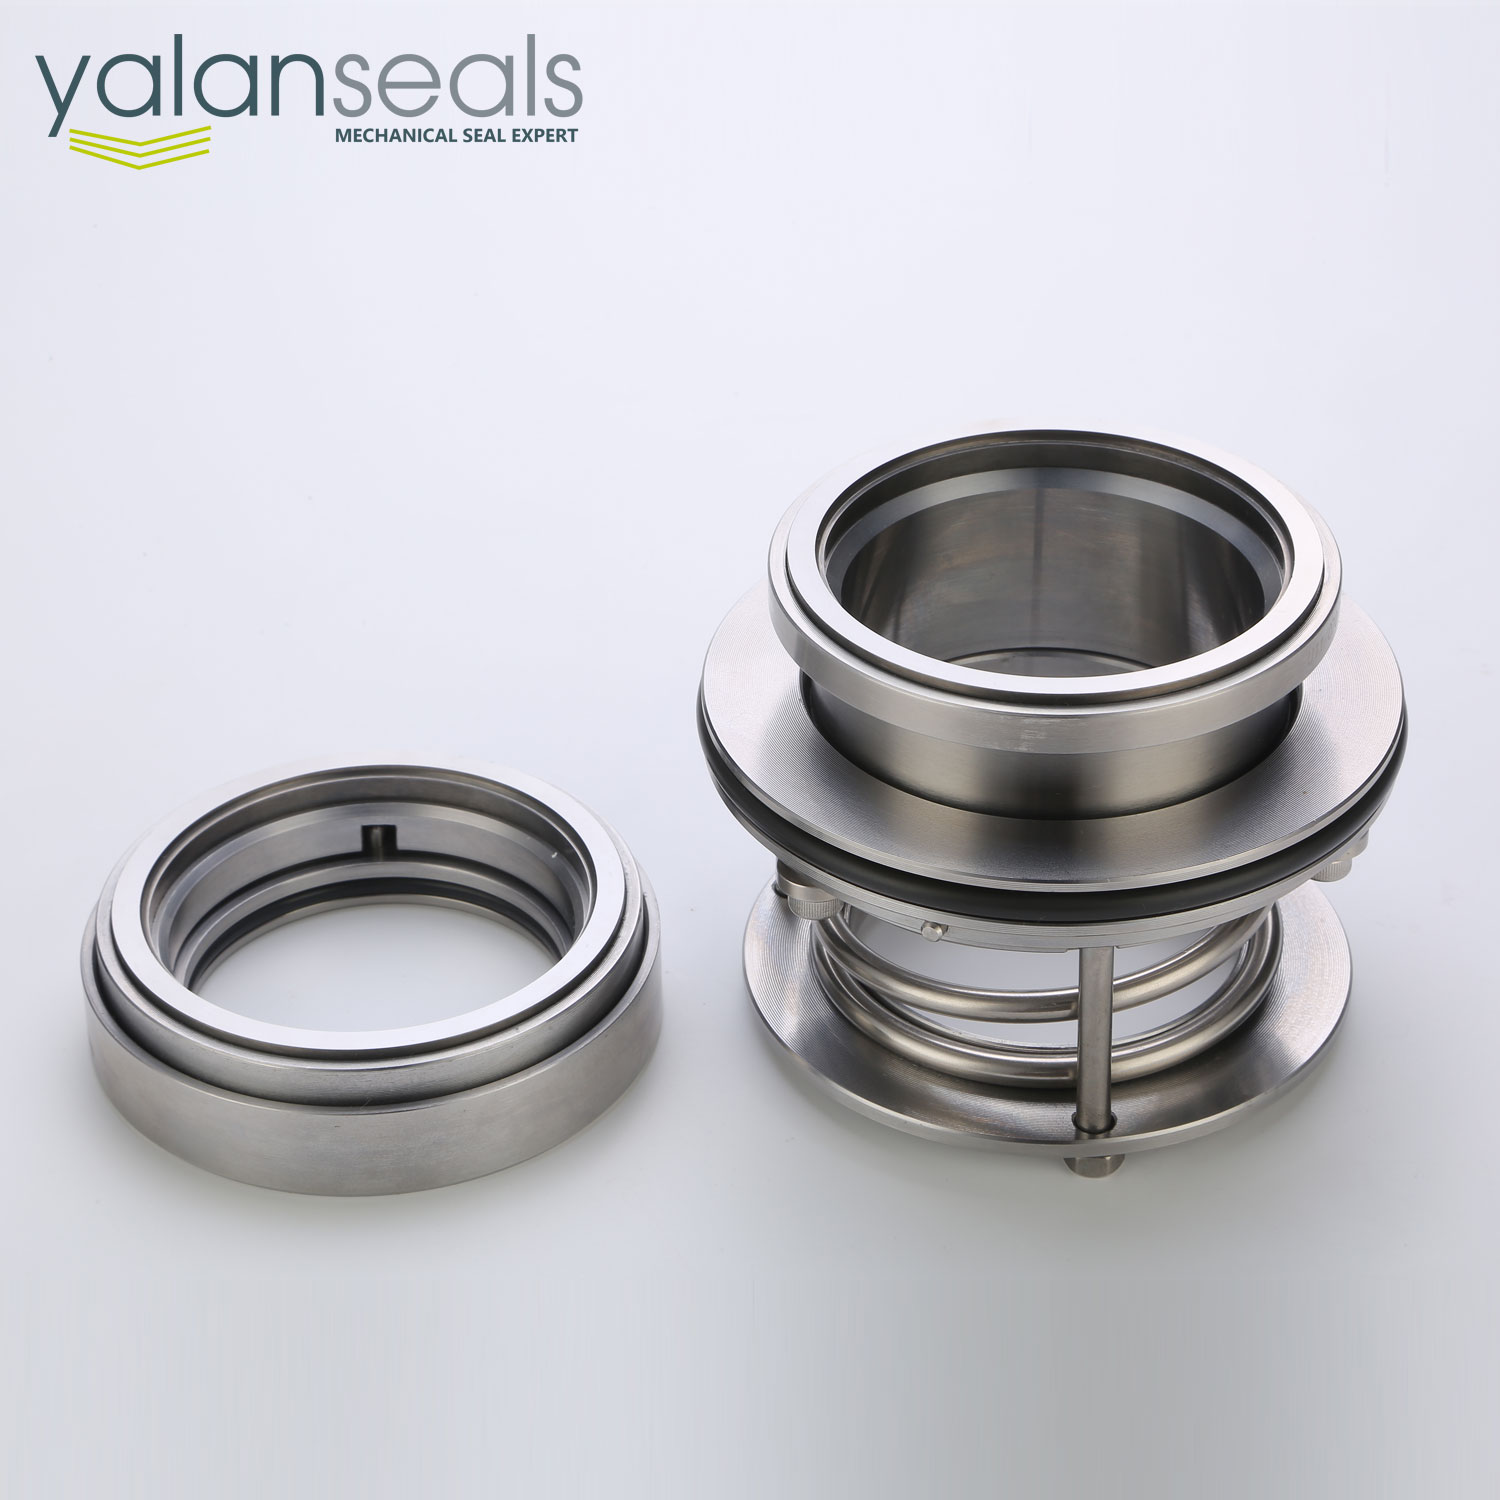 YALAN B173 Mechanical Seal for Slurry Pumps